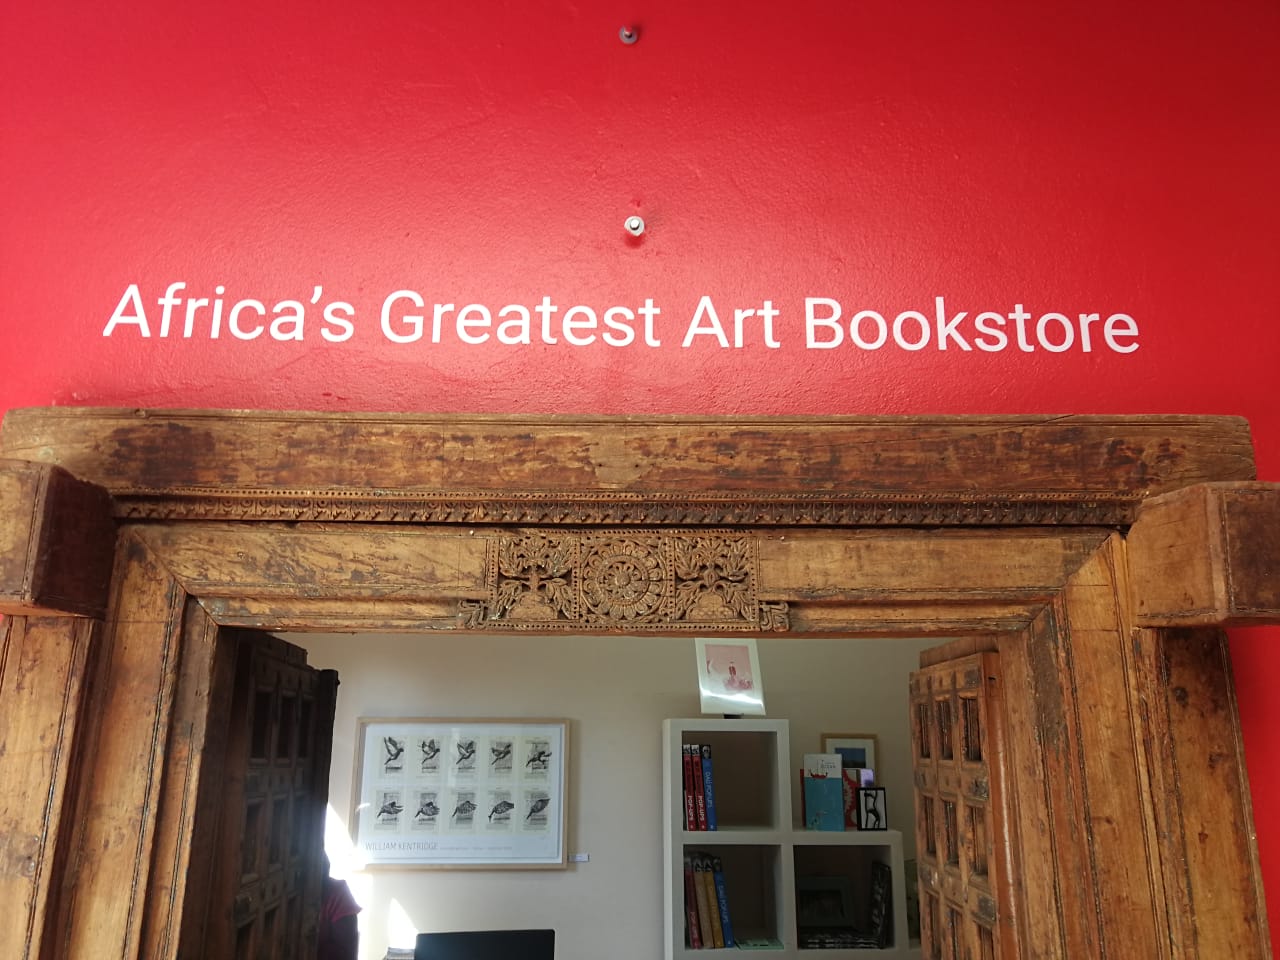 Africa’s Greatest Art Bookstore